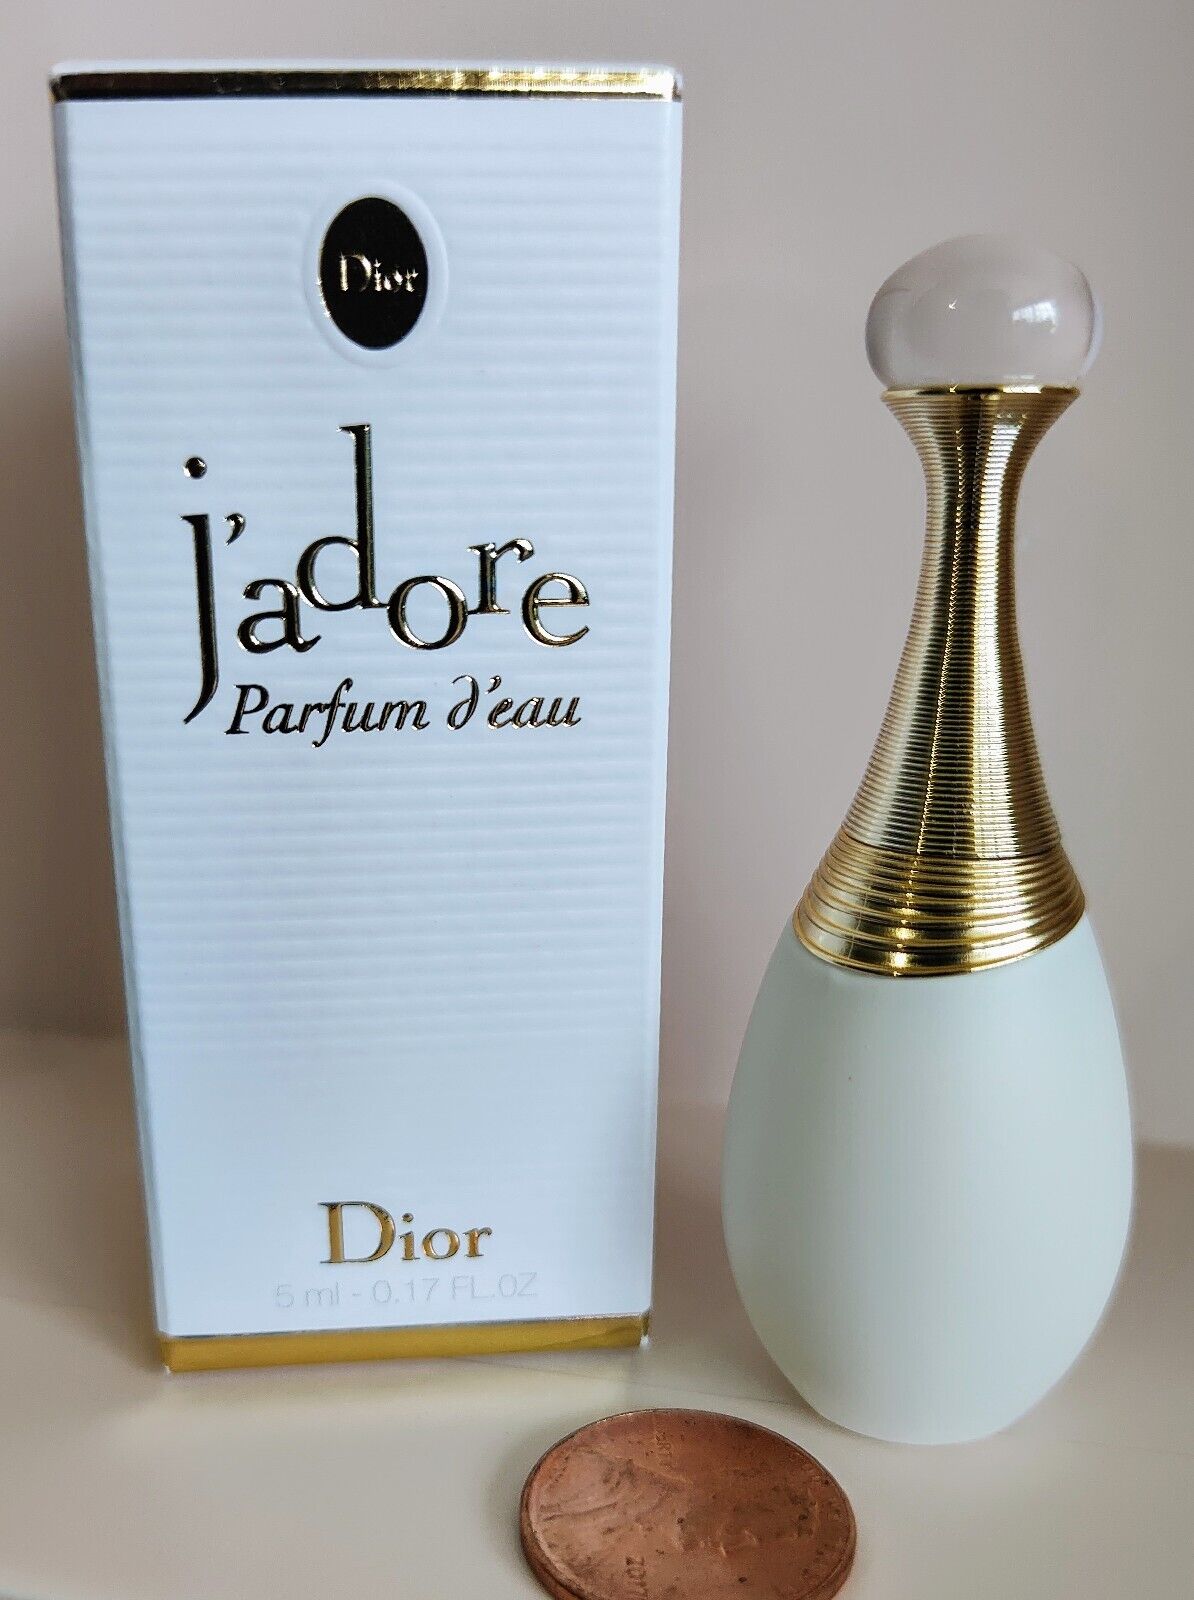 DIOR J'Adore PARFUM D'EAU Perfume 0.17 oz 5ml *NEW BOX* Mini TRAVEL Splash DAB